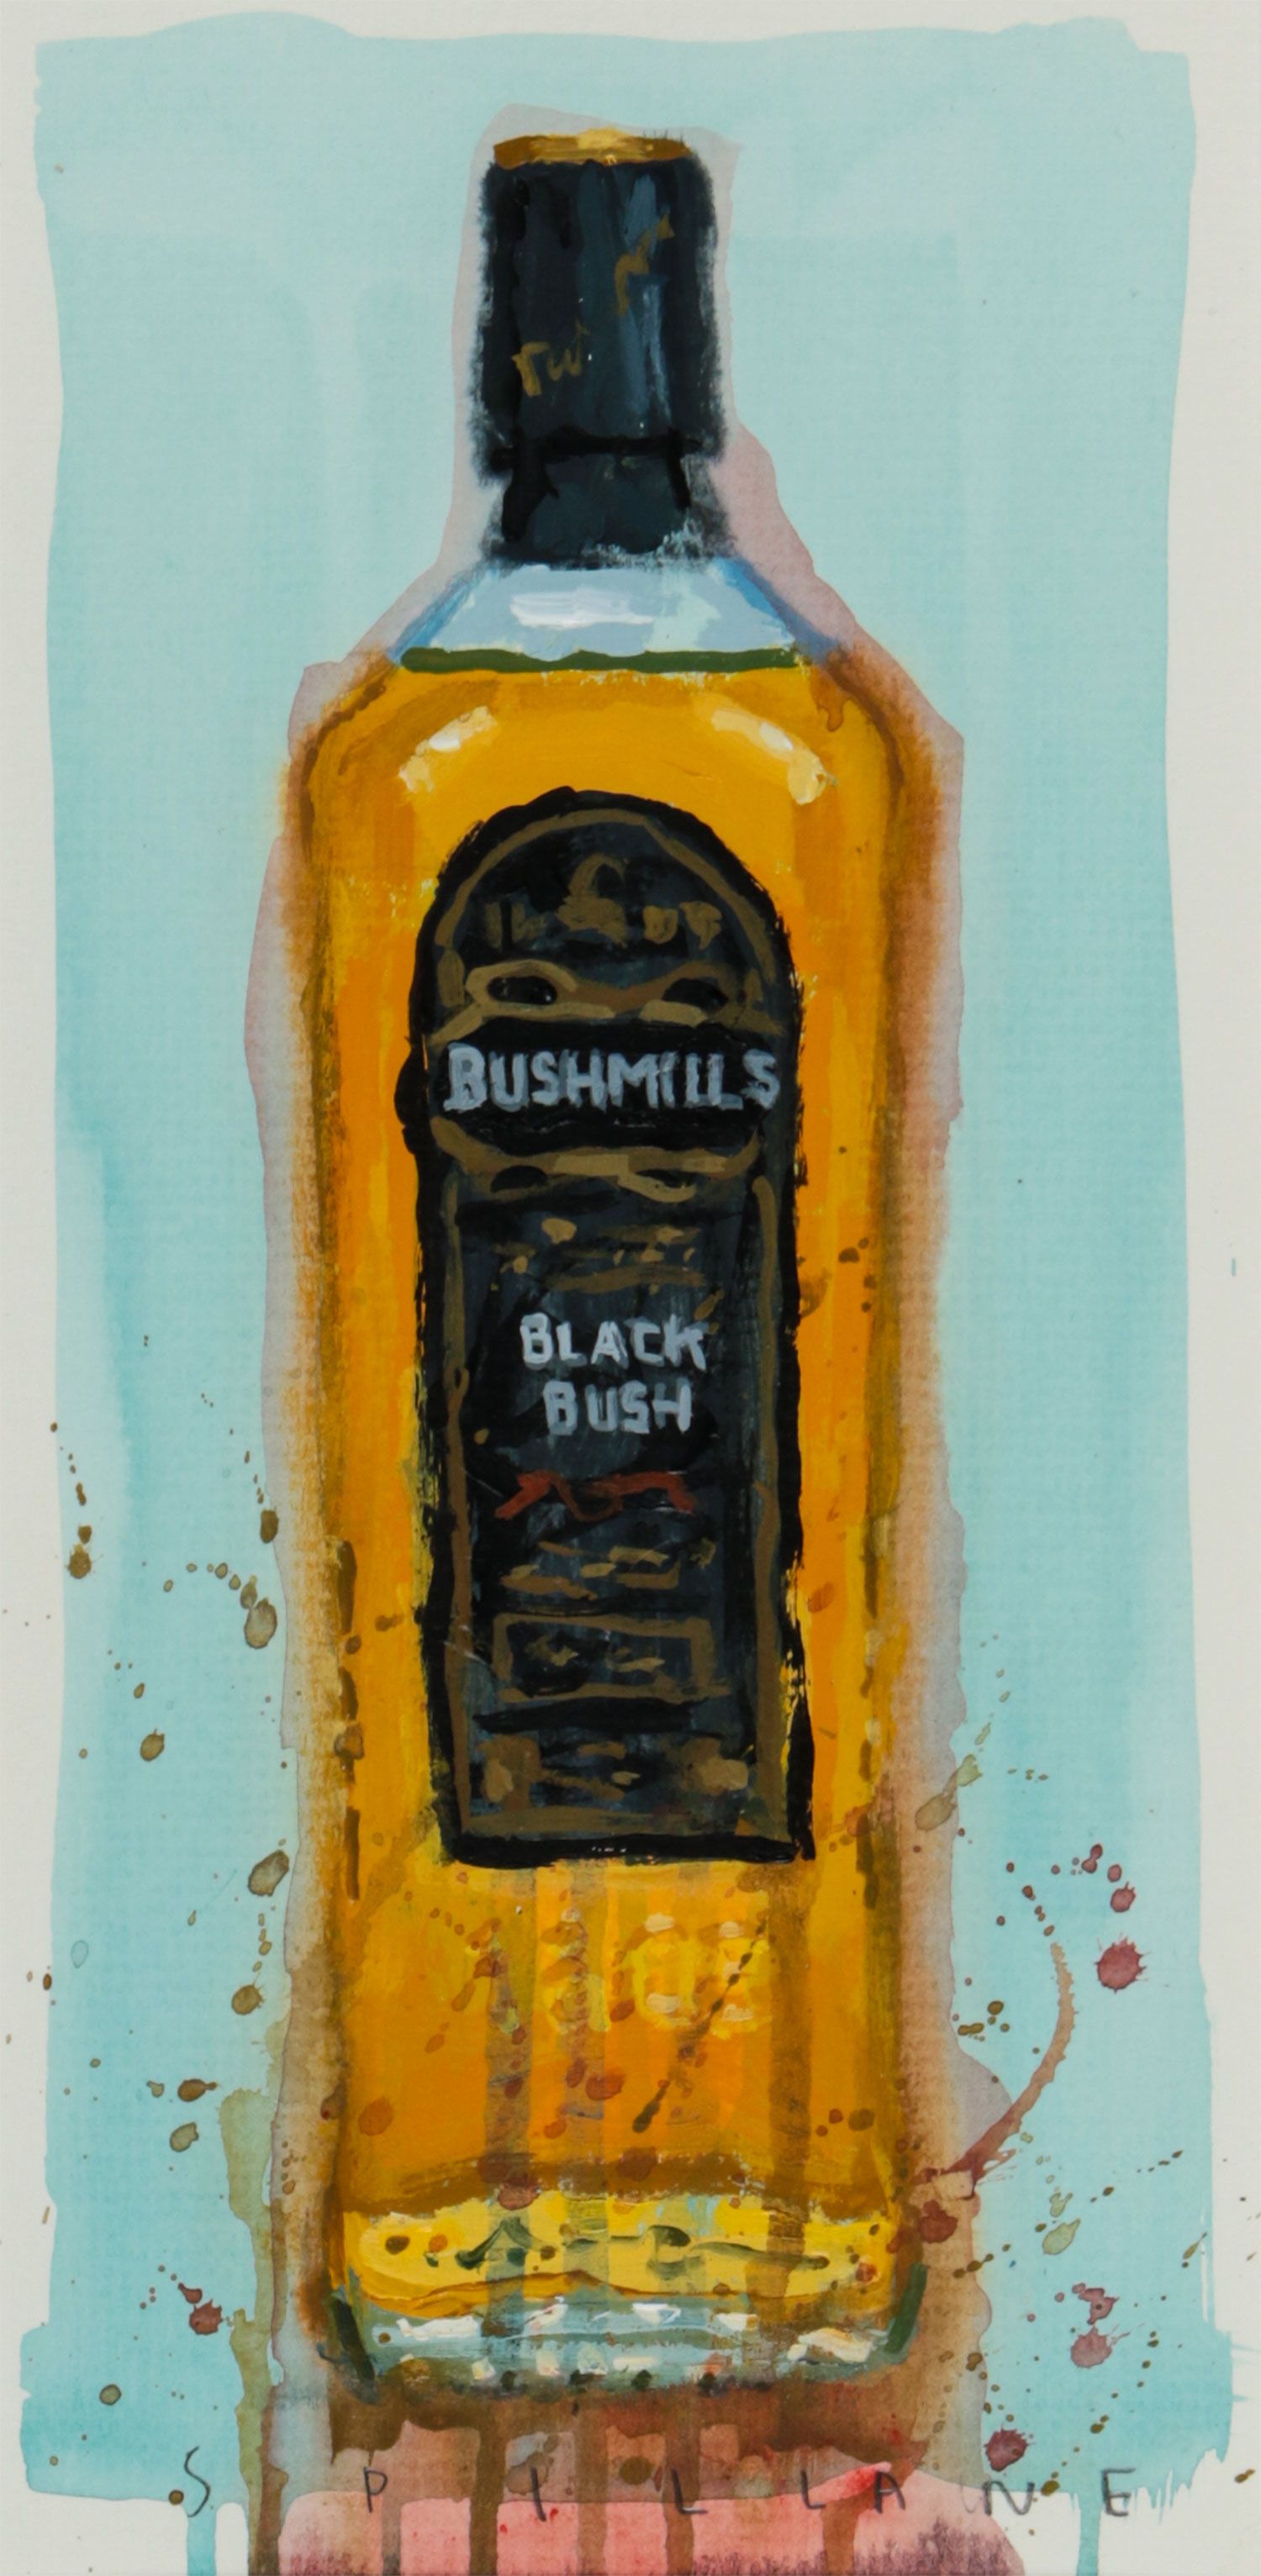 BUSHMILLS - (BLACK BUSH BOTTLE) by Spillane at Ross's Online Art Auctions